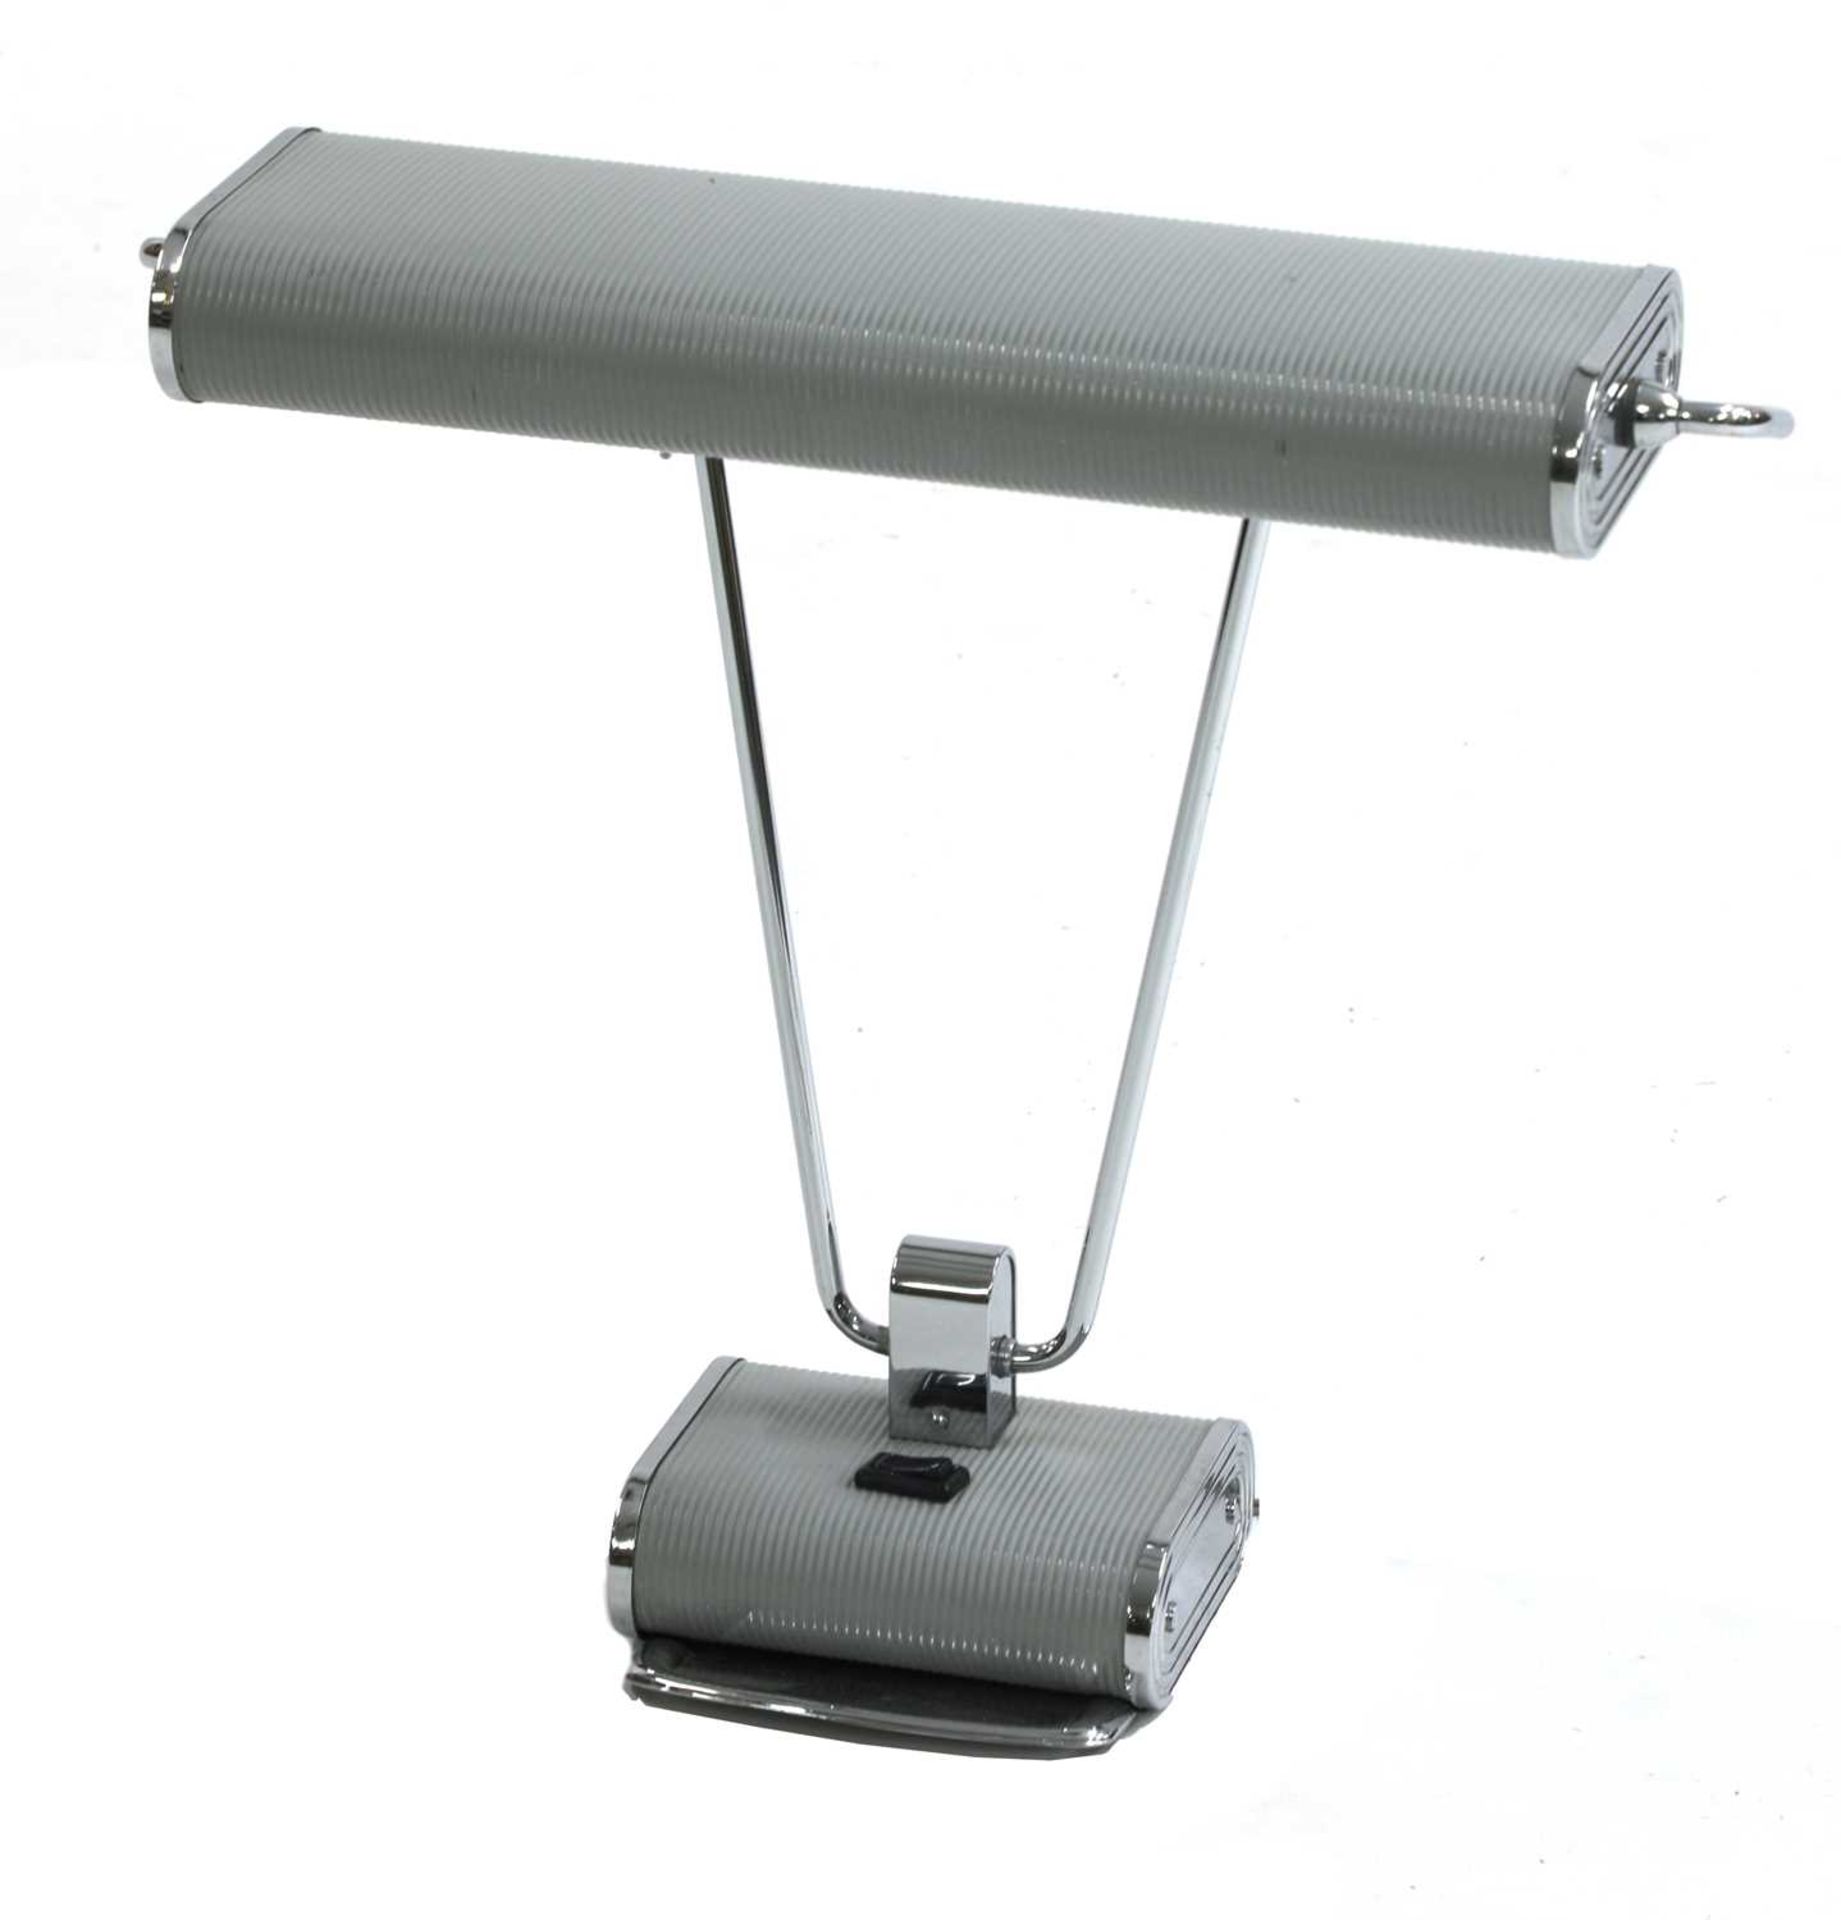 A desk lamp 'Jumo' model N71,